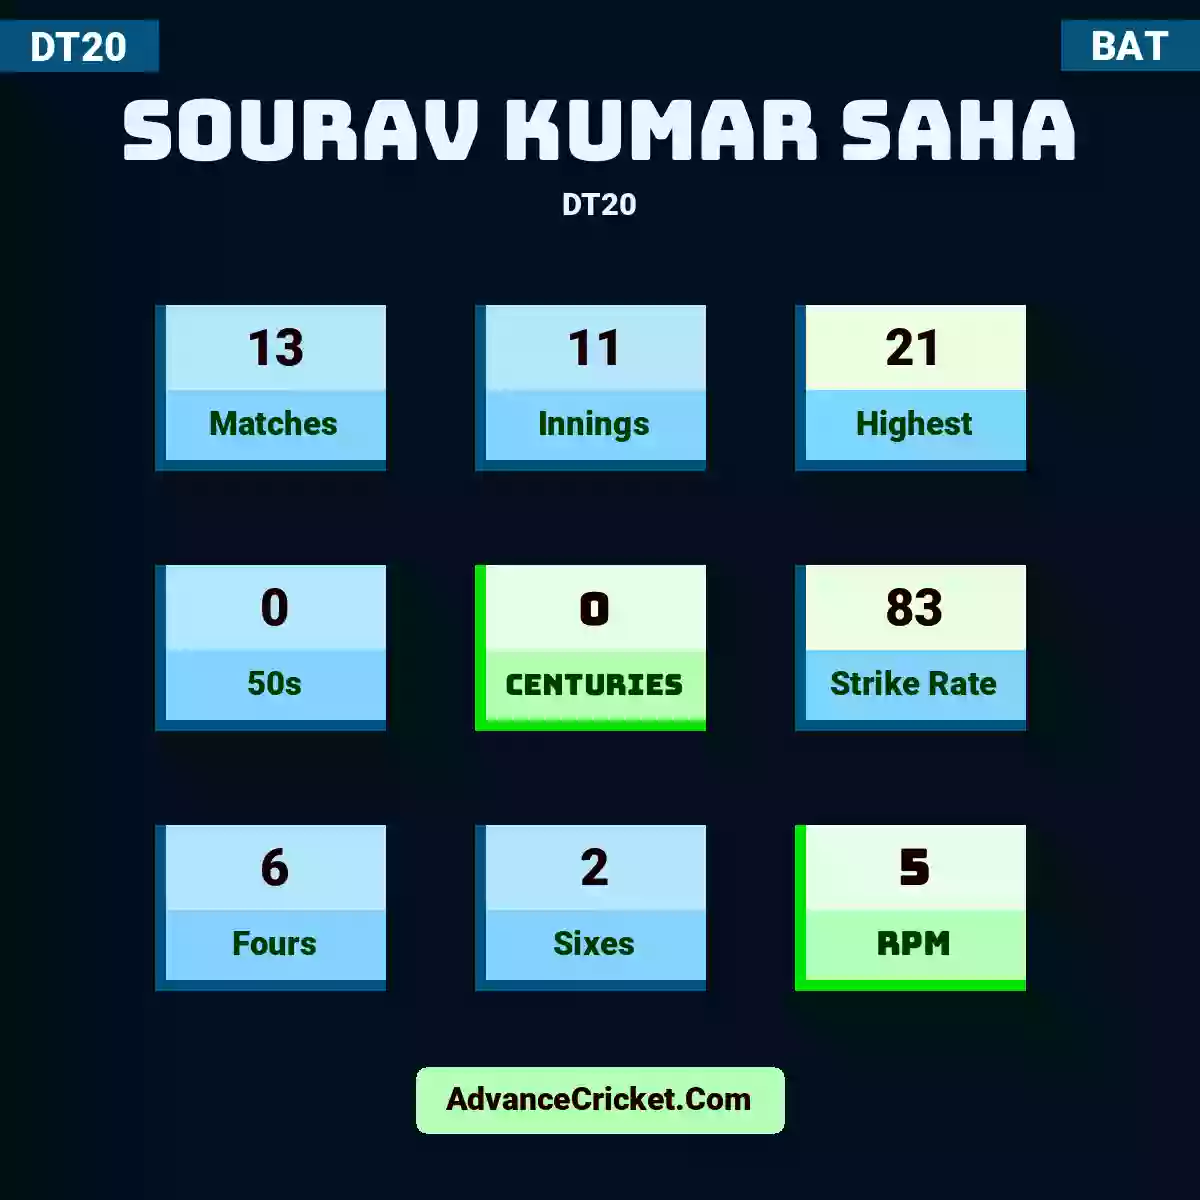 Sourav Kumar Saha DT20 , Sourav Kumar Saha played 13 matches, scored 21 runs as highest, 0 half-centuries, and 0 centuries, with a strike rate of 83. S.Saha hit 6 fours and 2 sixes, with an RPM of 5.